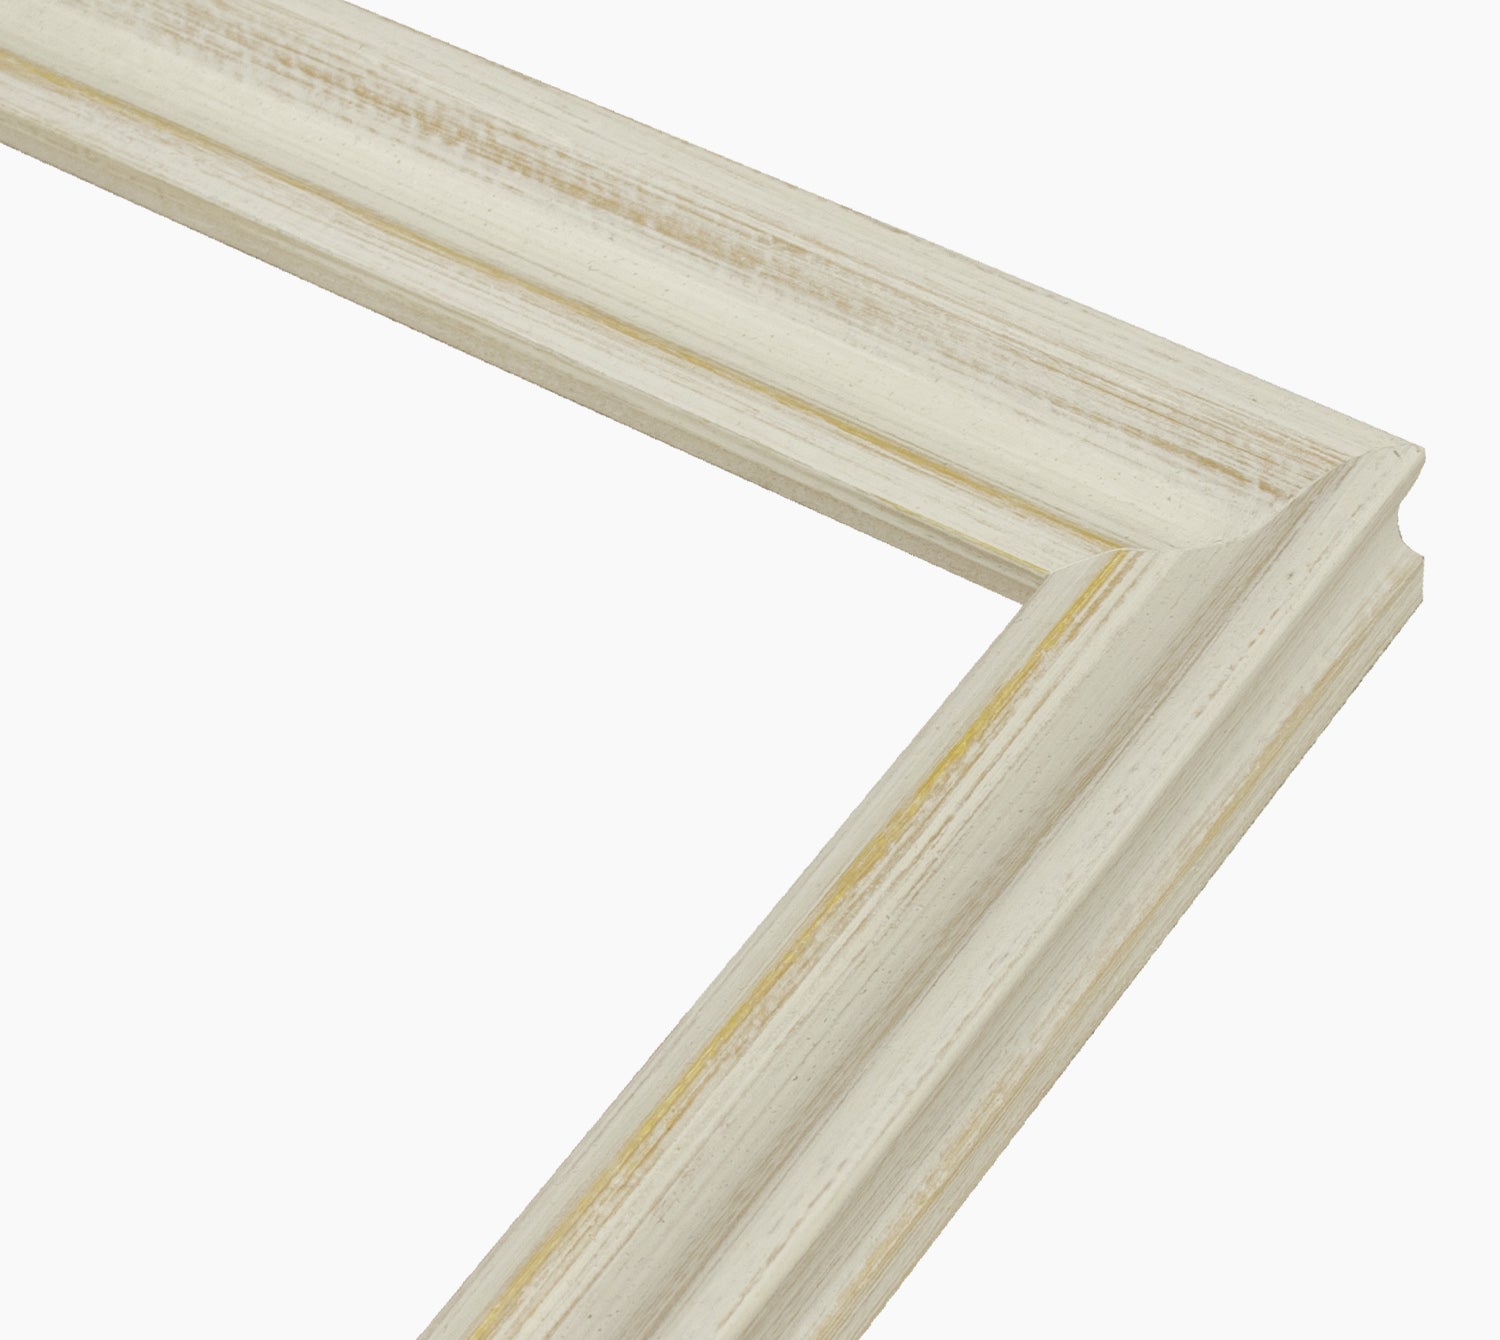 145.915 cadre en bois à fond ocre blanc mesure de profil 35x30 mm Lombarda cornici S.n.c.